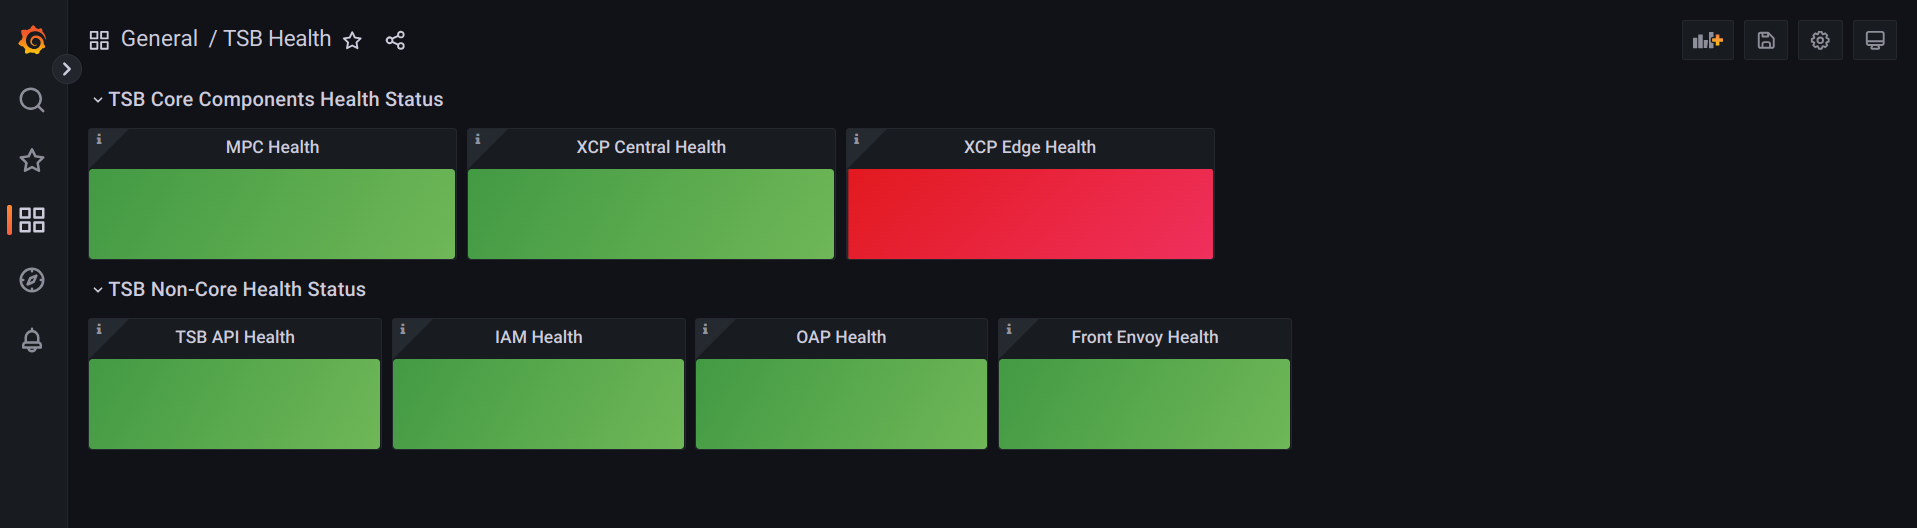 Tetrate Service Bridge health status dashboard alert